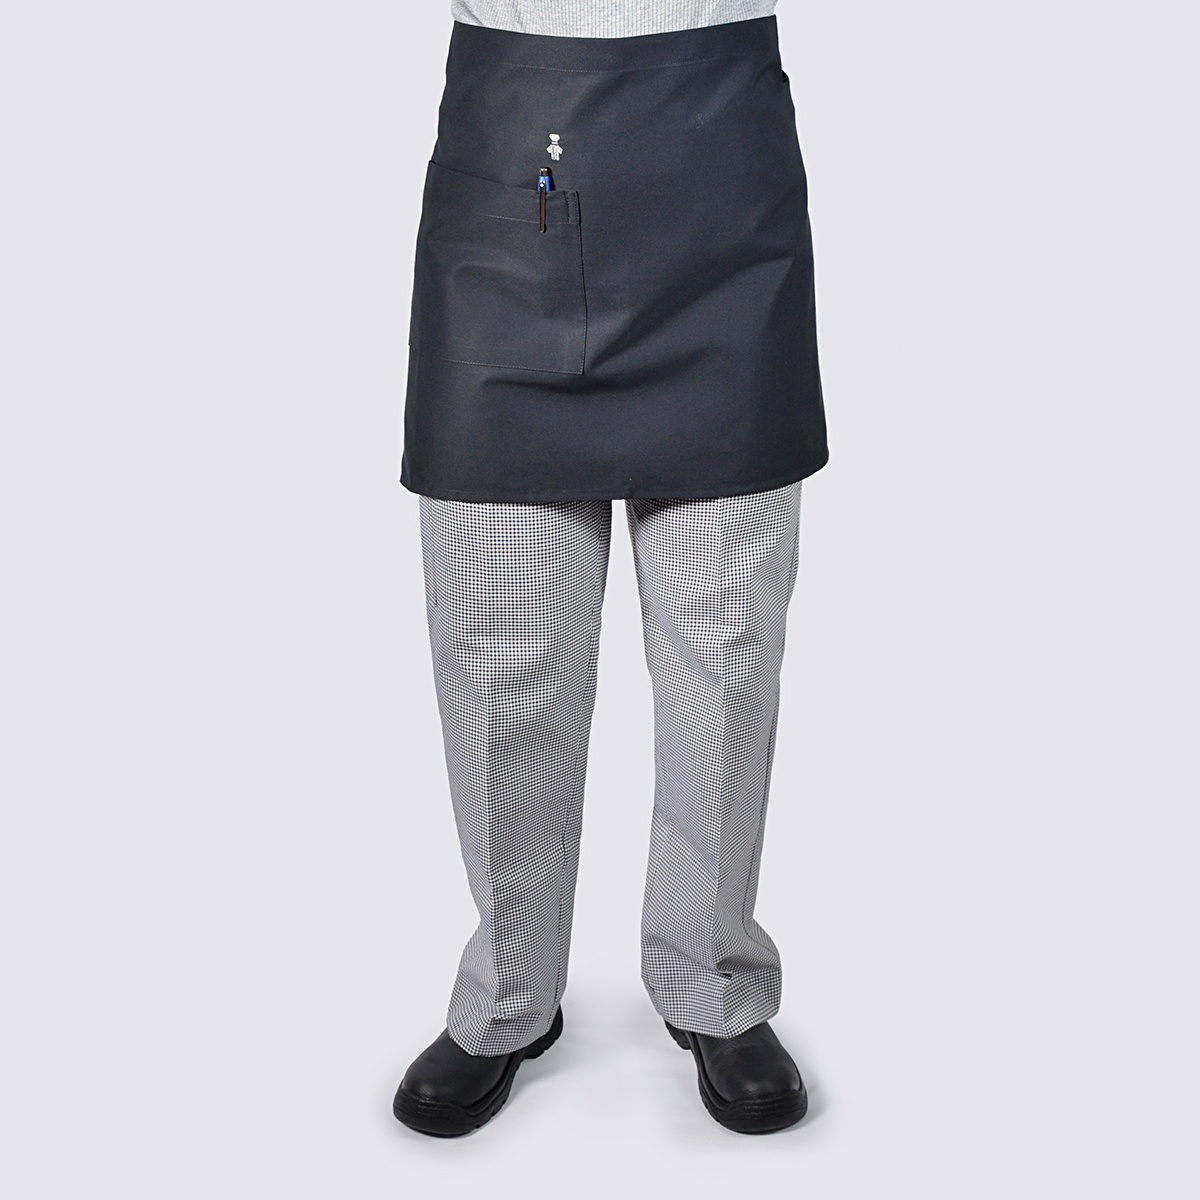 Bistro Chef Aprons with Pocket- Half - Black - Short